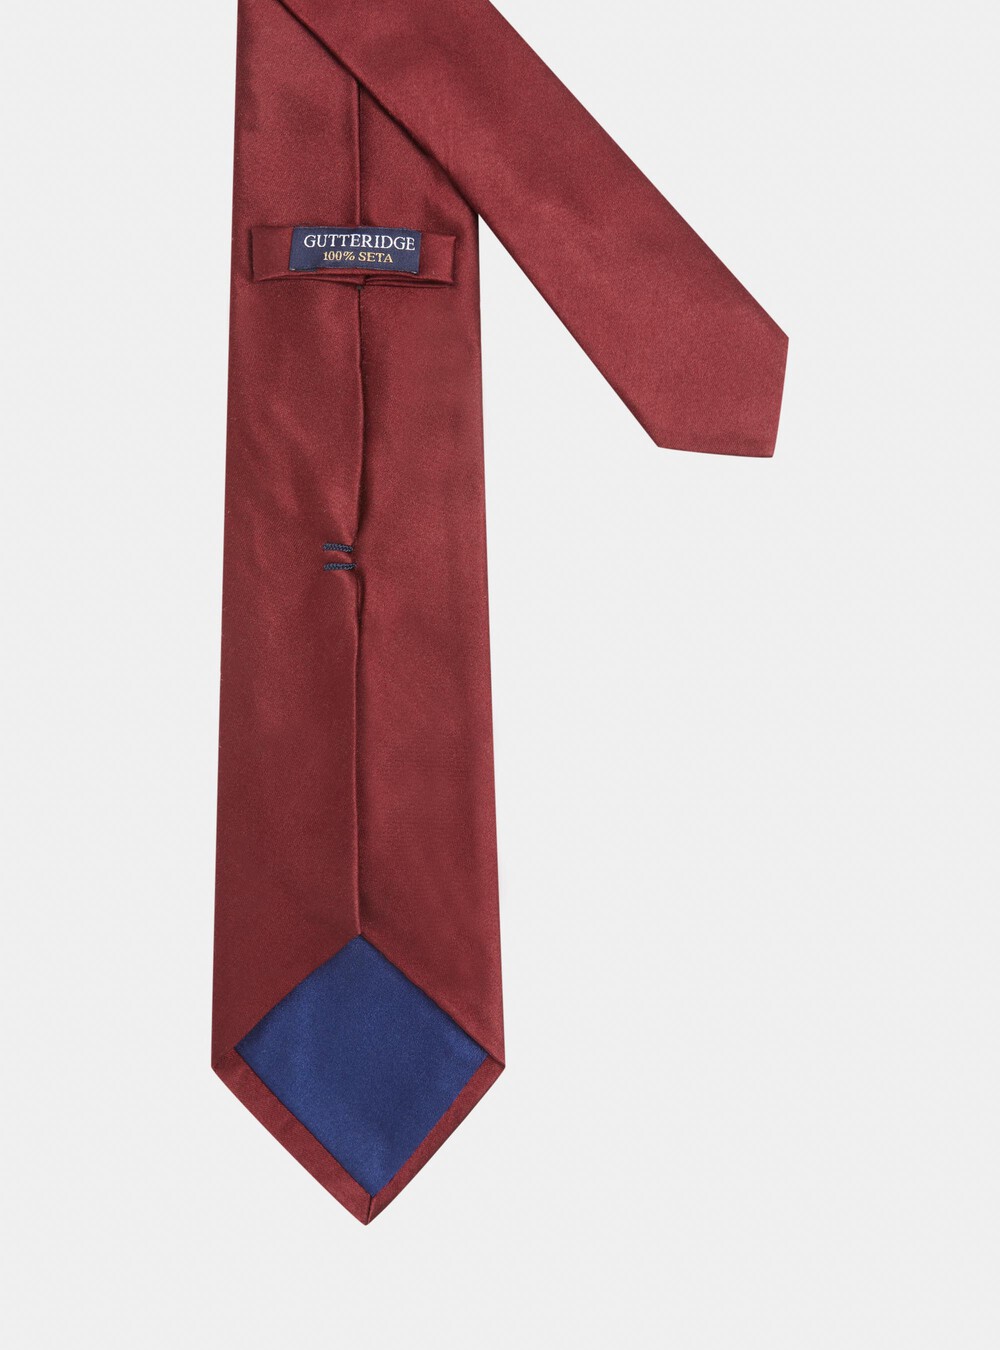 Cravatta tinta unita in seta | Gutteridge | Cravatte Uomo